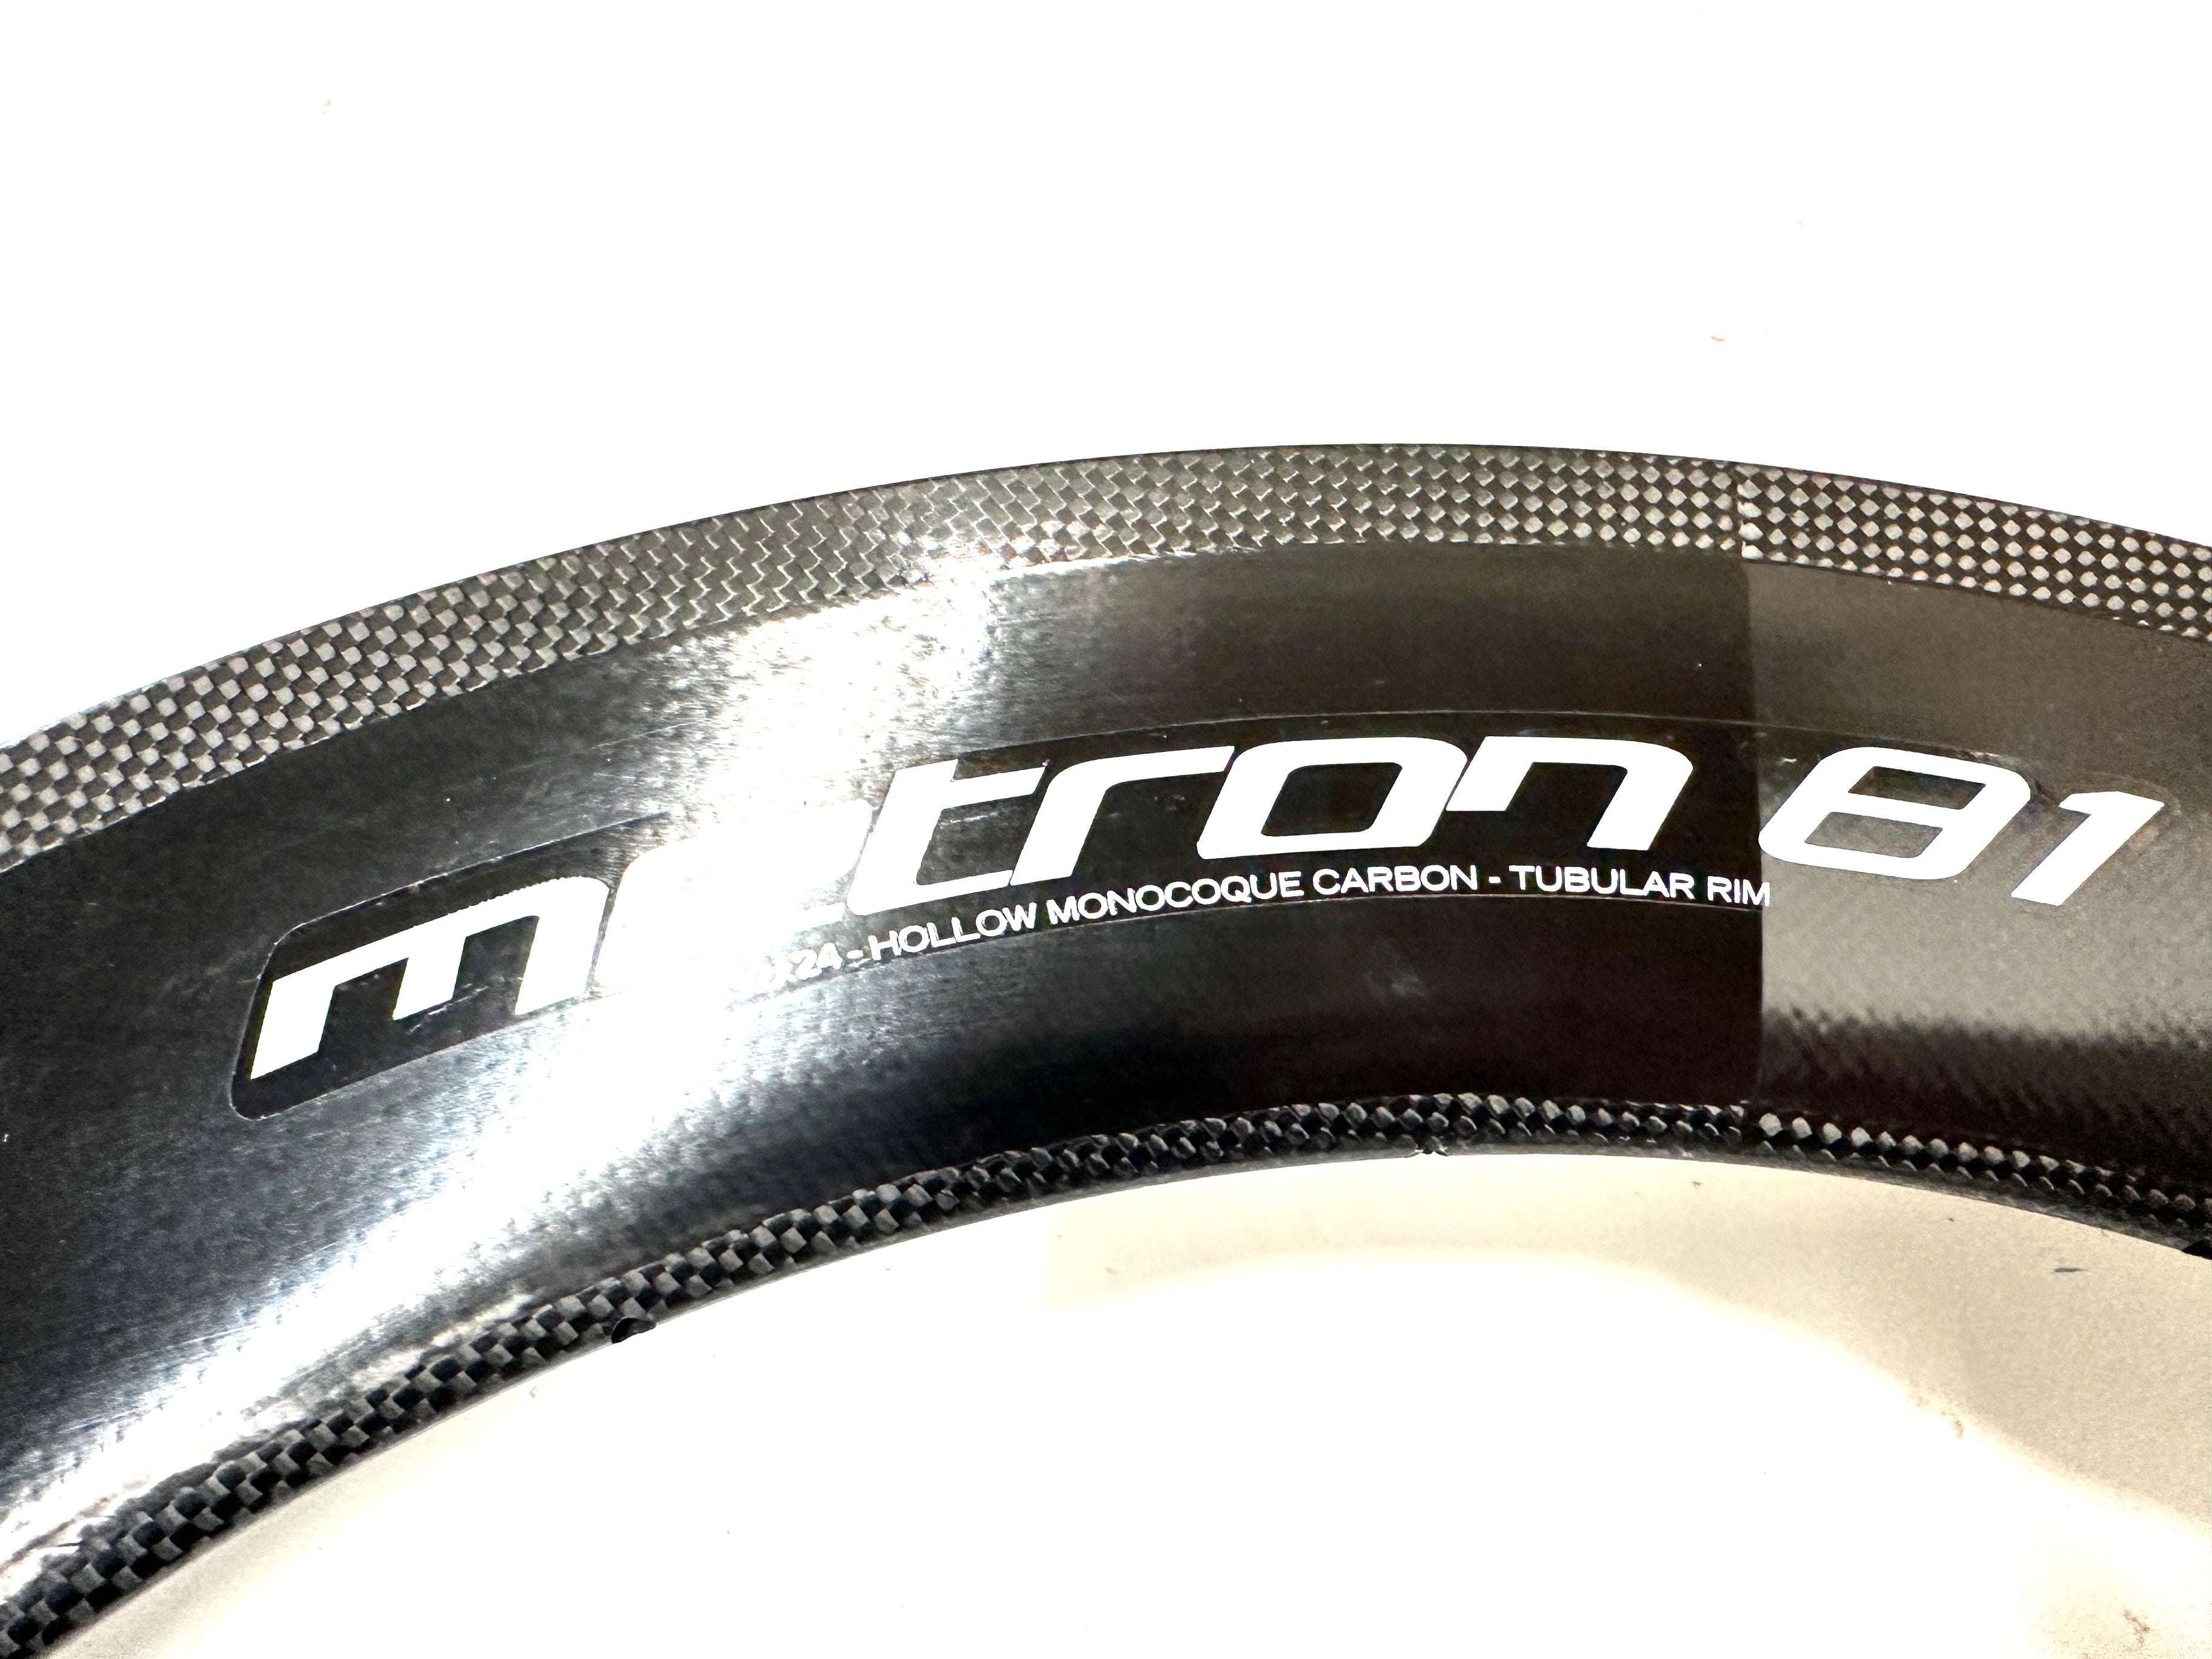 FSA Vision 700c Metron 81 18H 18 Hole Carbon Tubular Front Bike Wheel Rim NEW